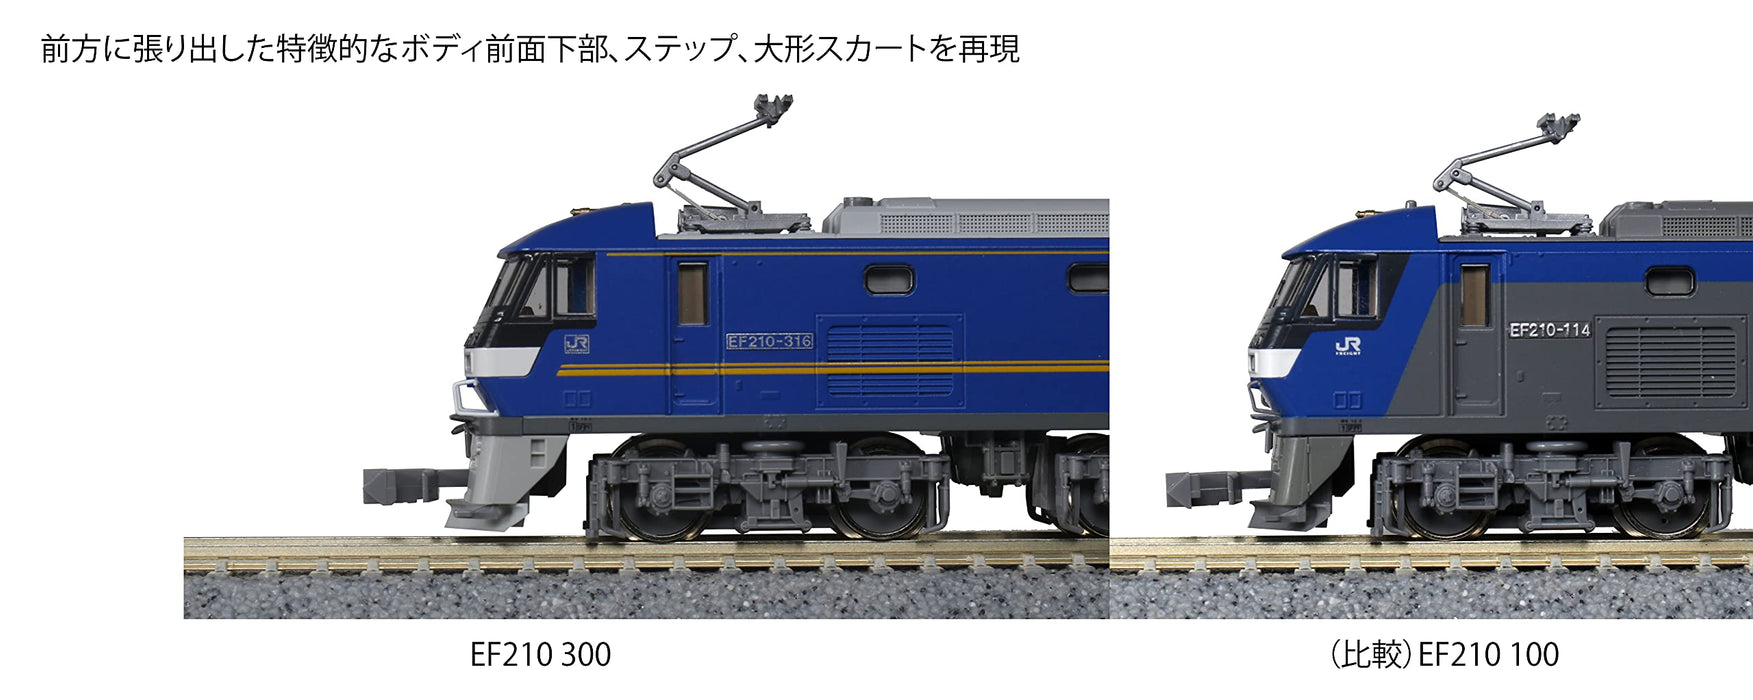 KATO 3092-1 Electric Locomotive Ef210 300 N Scale